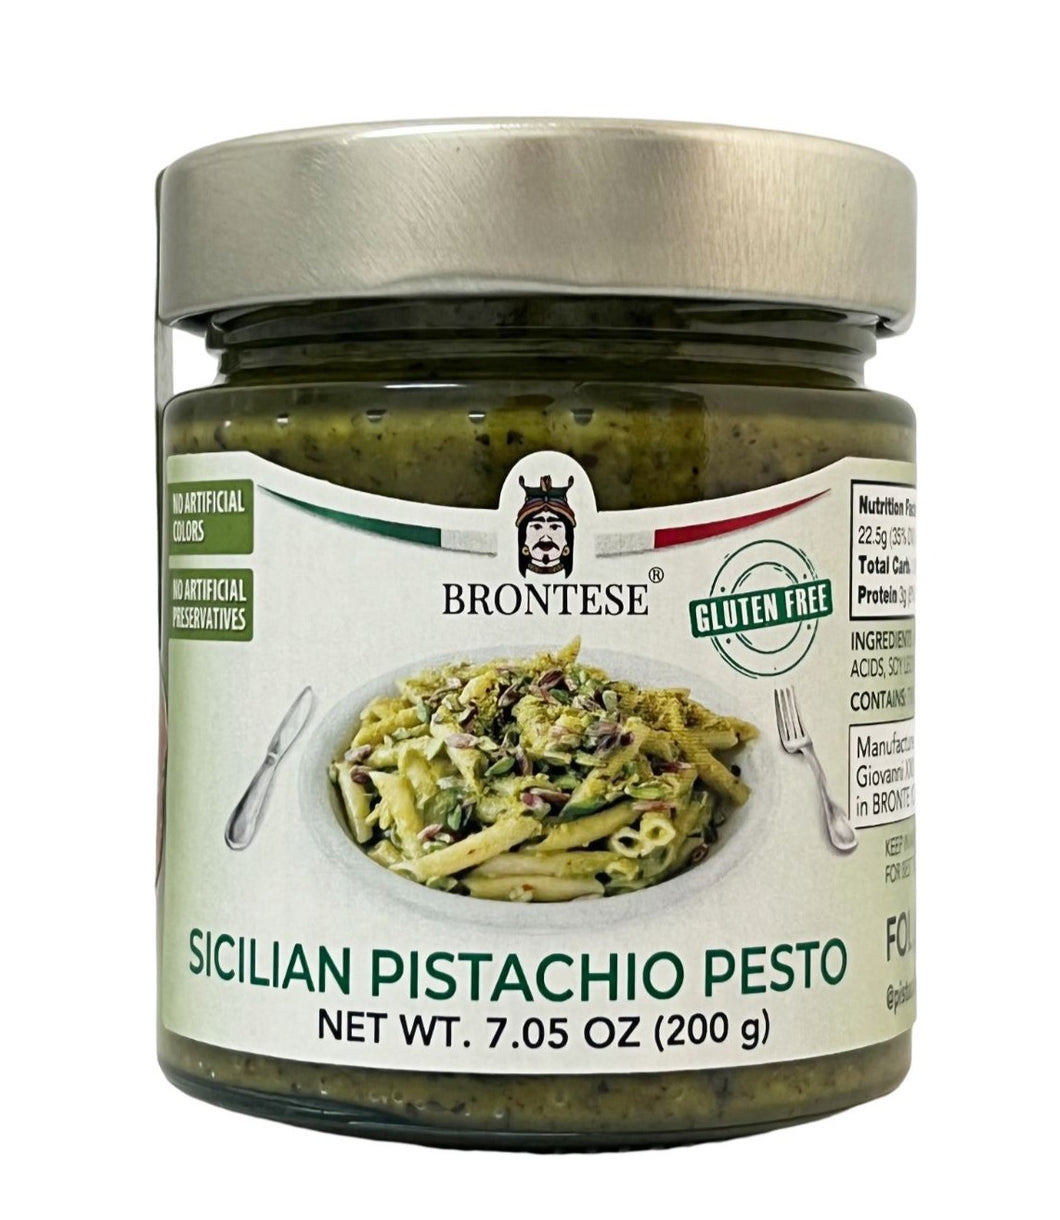 Sicilian Pistacchio Pesto, by Brontese 7.05 oz